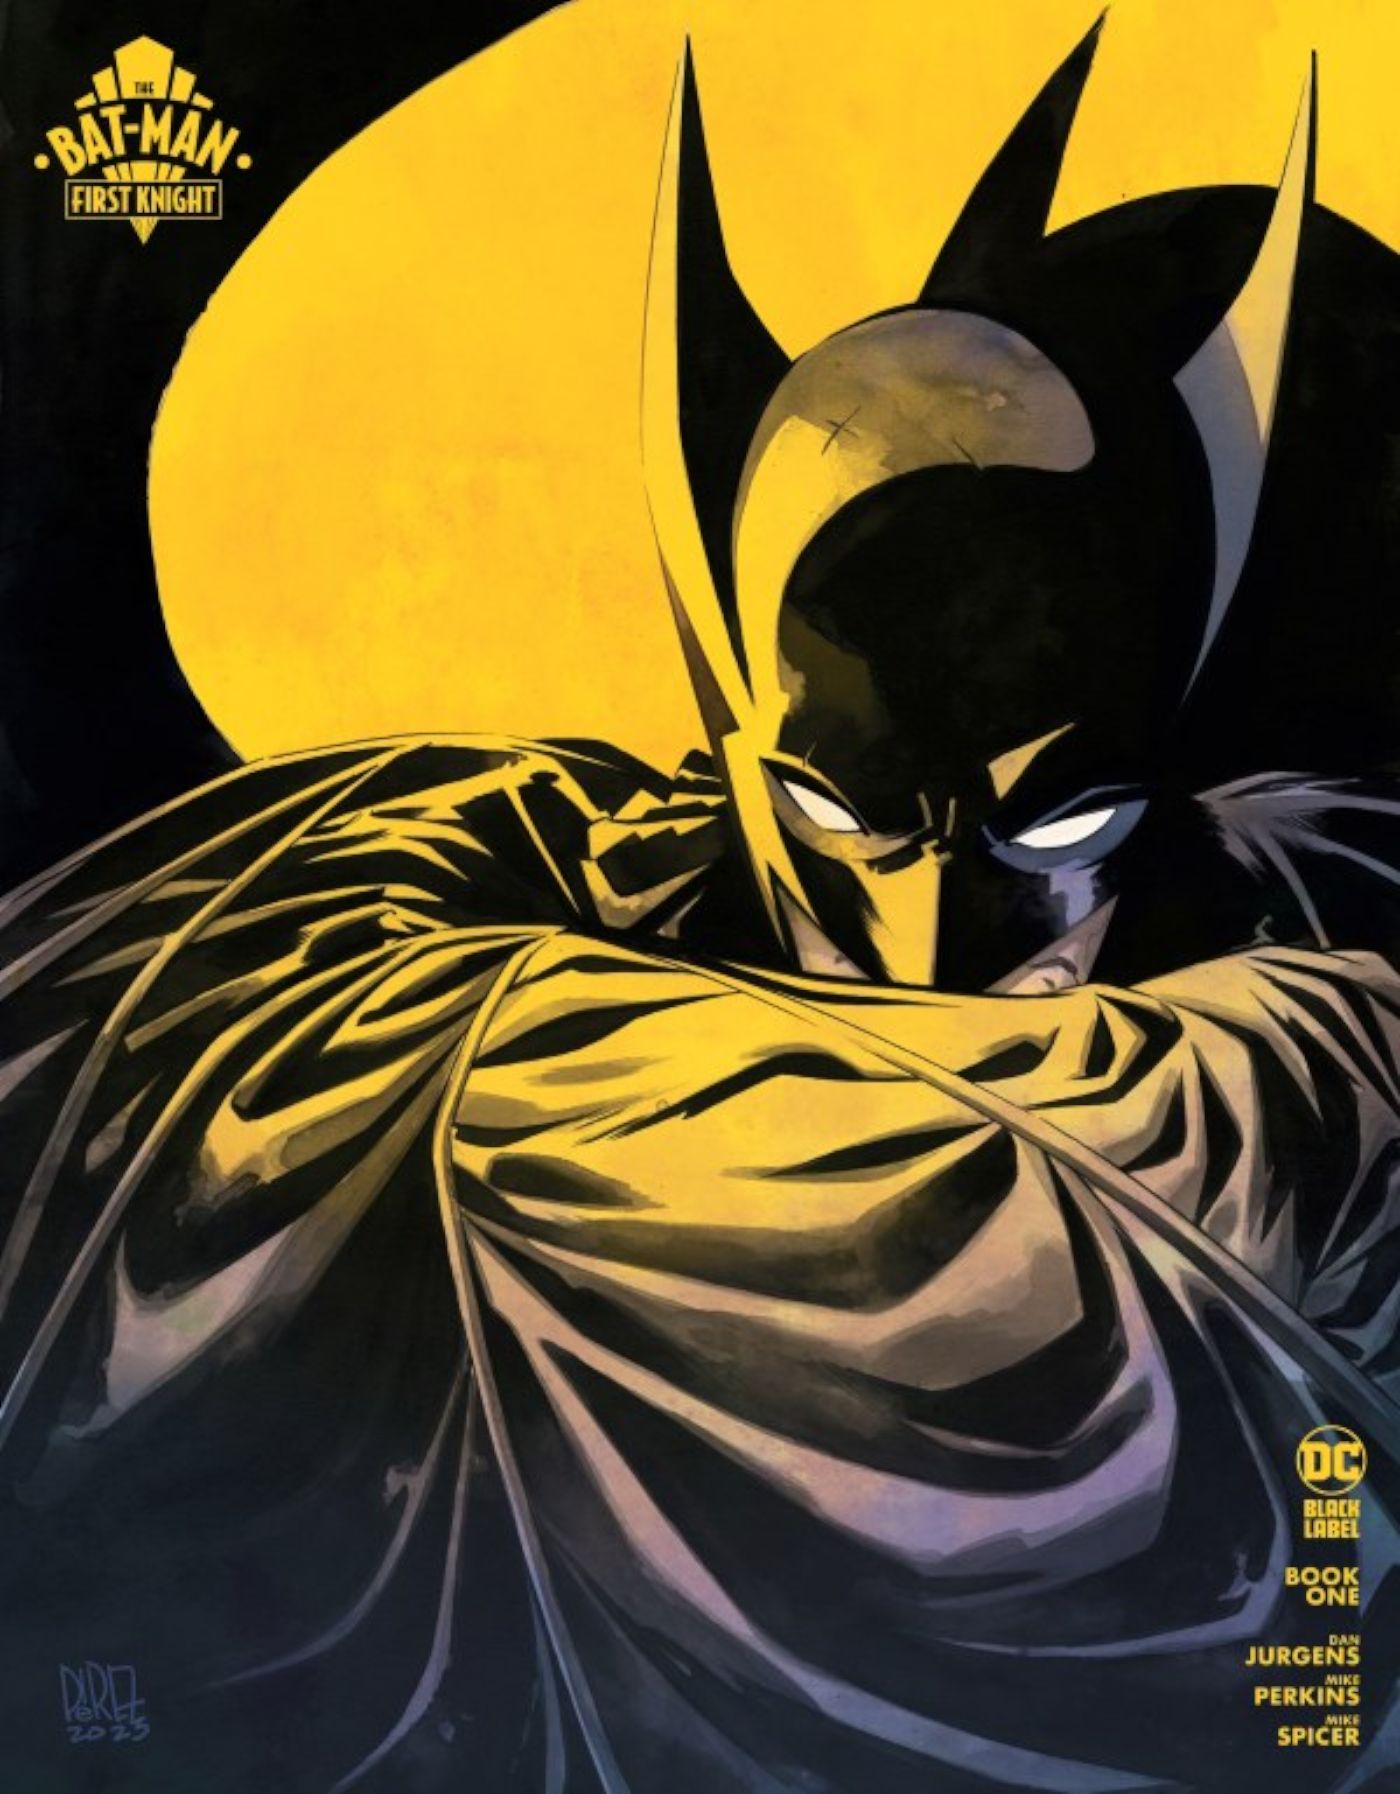 Variante 1 da capa do primeiro cavaleiro do Batman